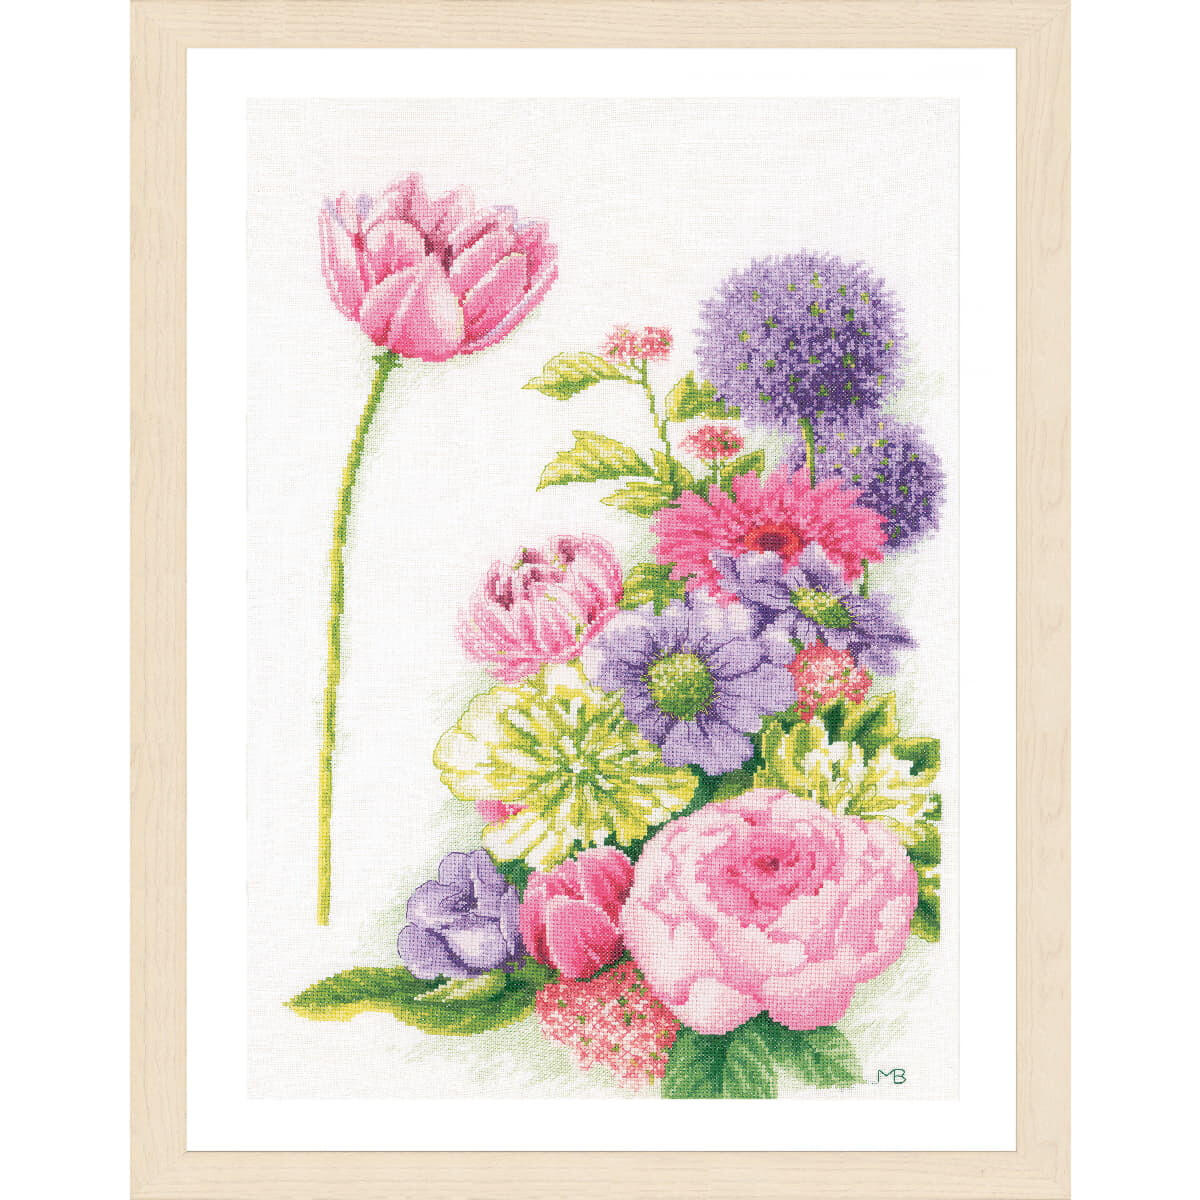 A framed floral artwork, reminiscent of a cross-stitch...